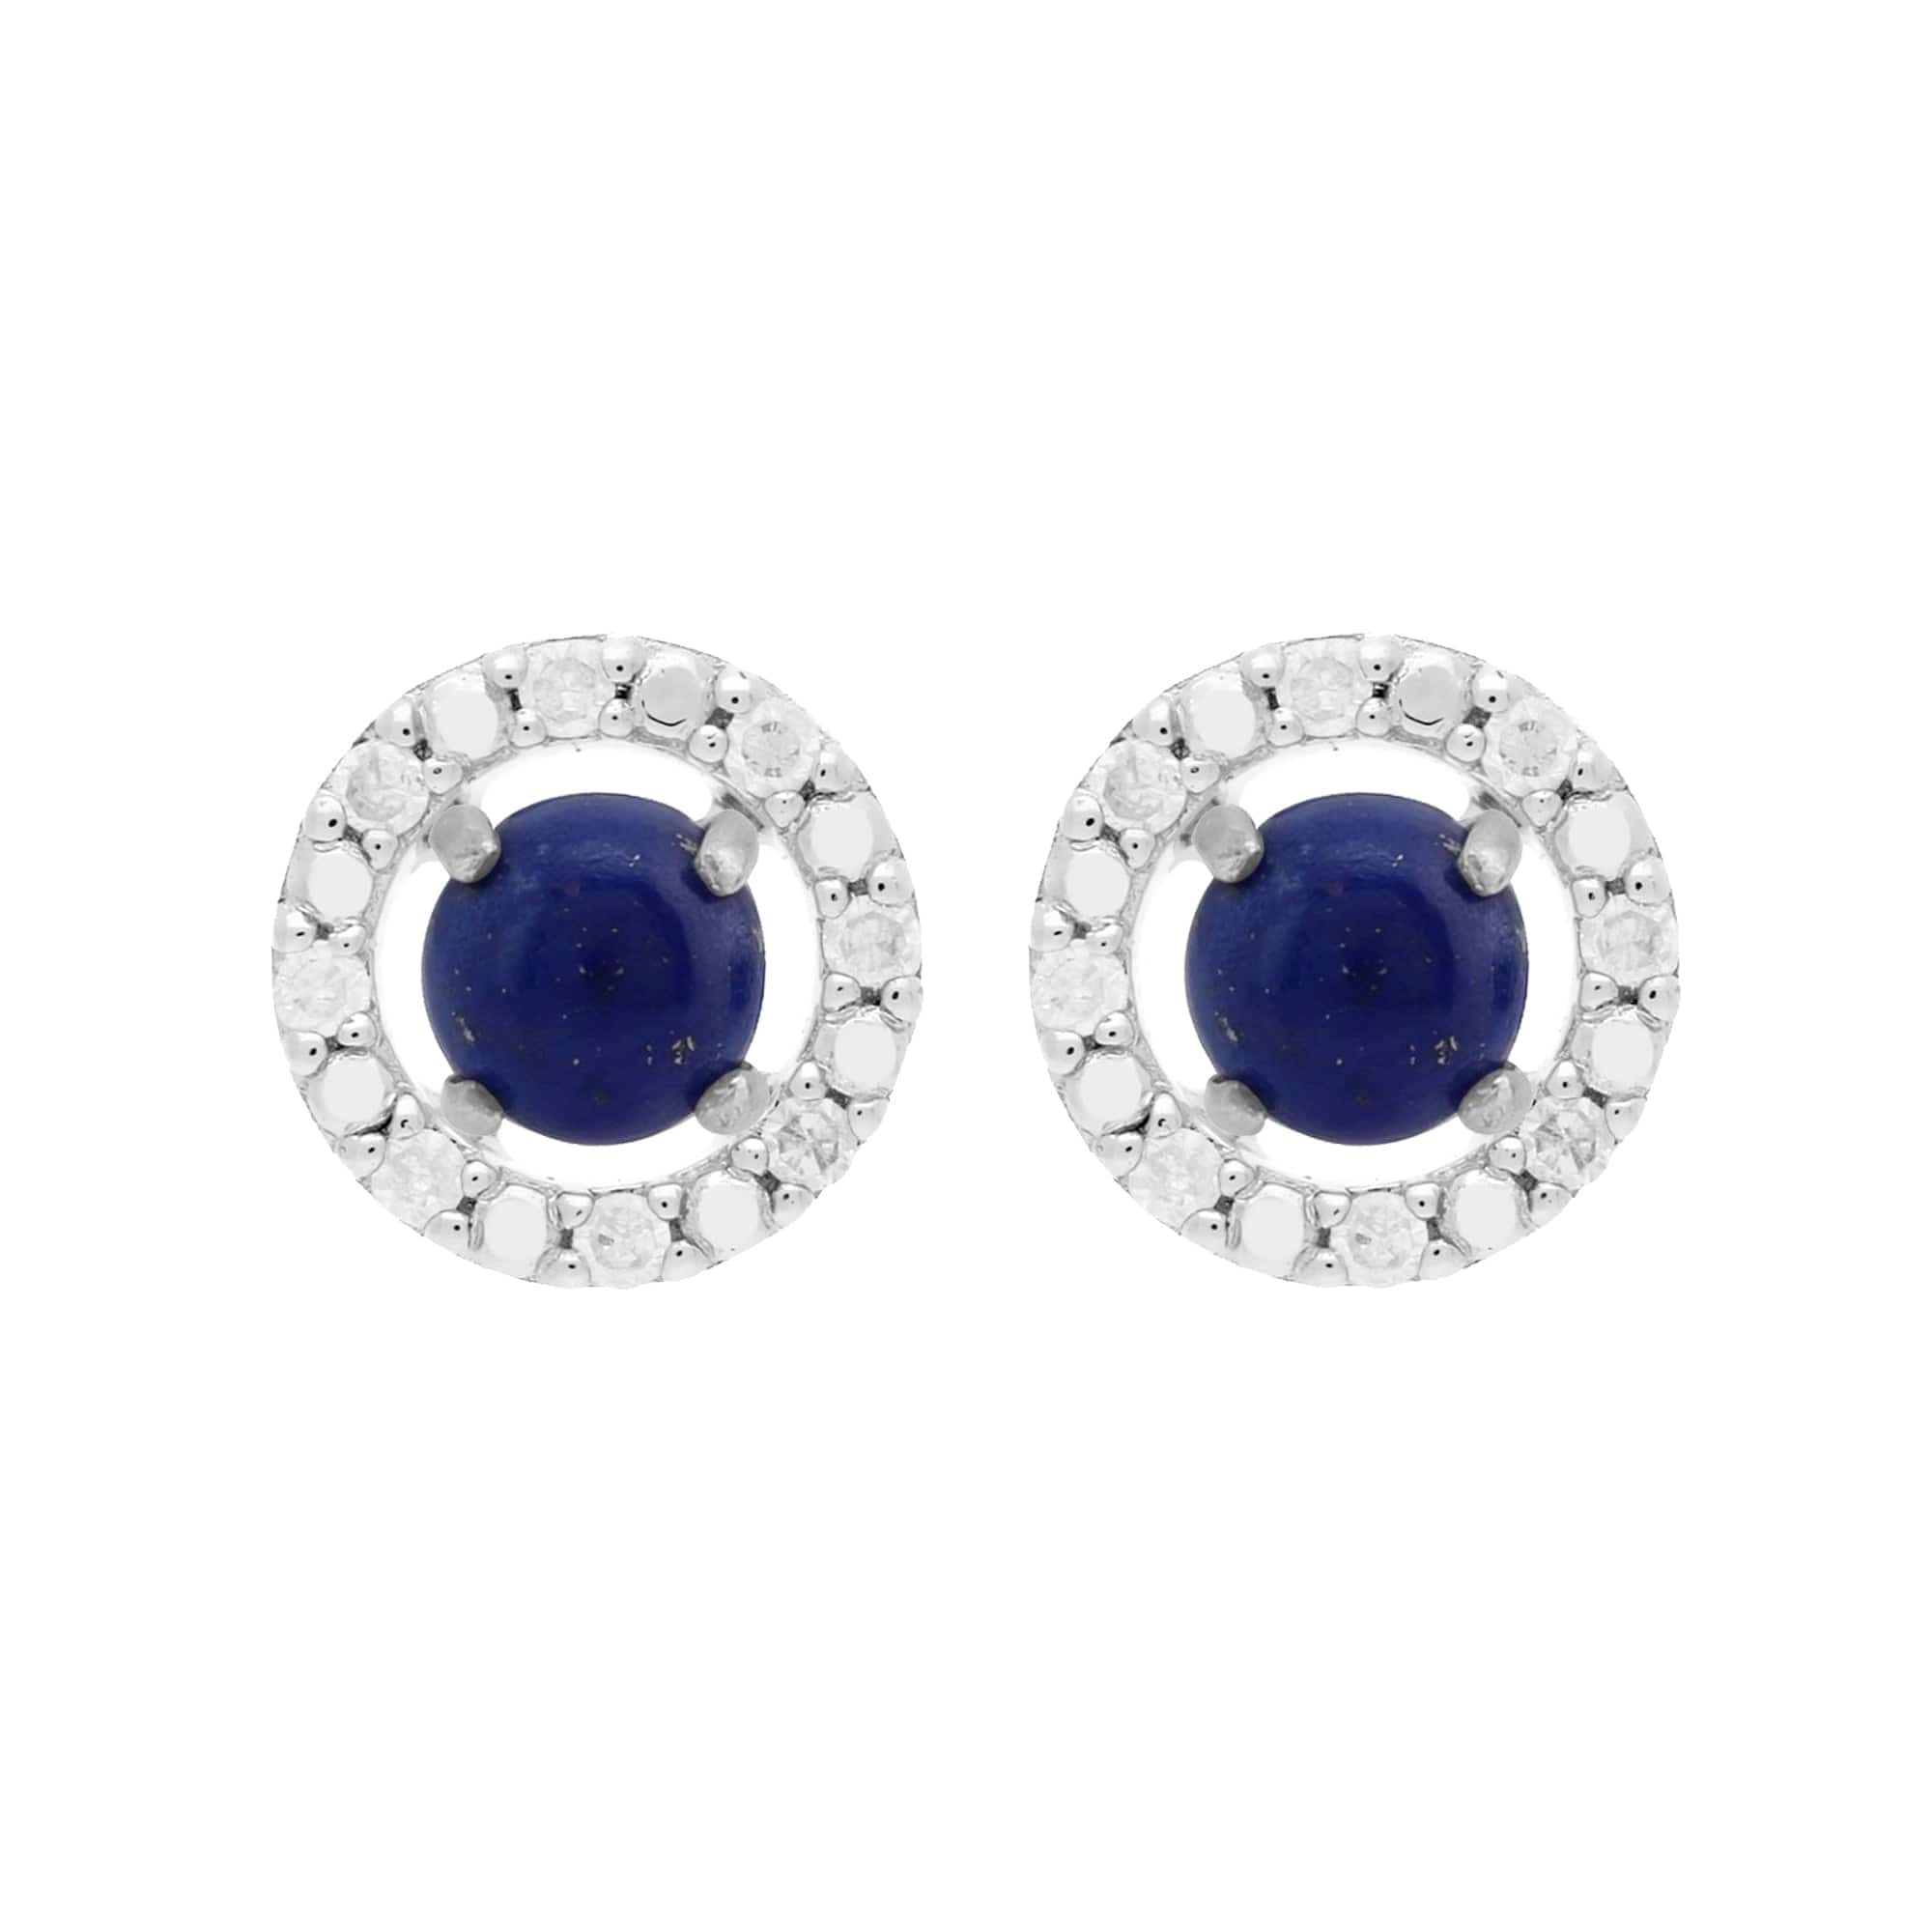 162E0071199-162E0228019 Classic Round Lapis Lazuli Stud Earrings with Detachable Diamond Round Ear Jacket in 9ct White Gold 1